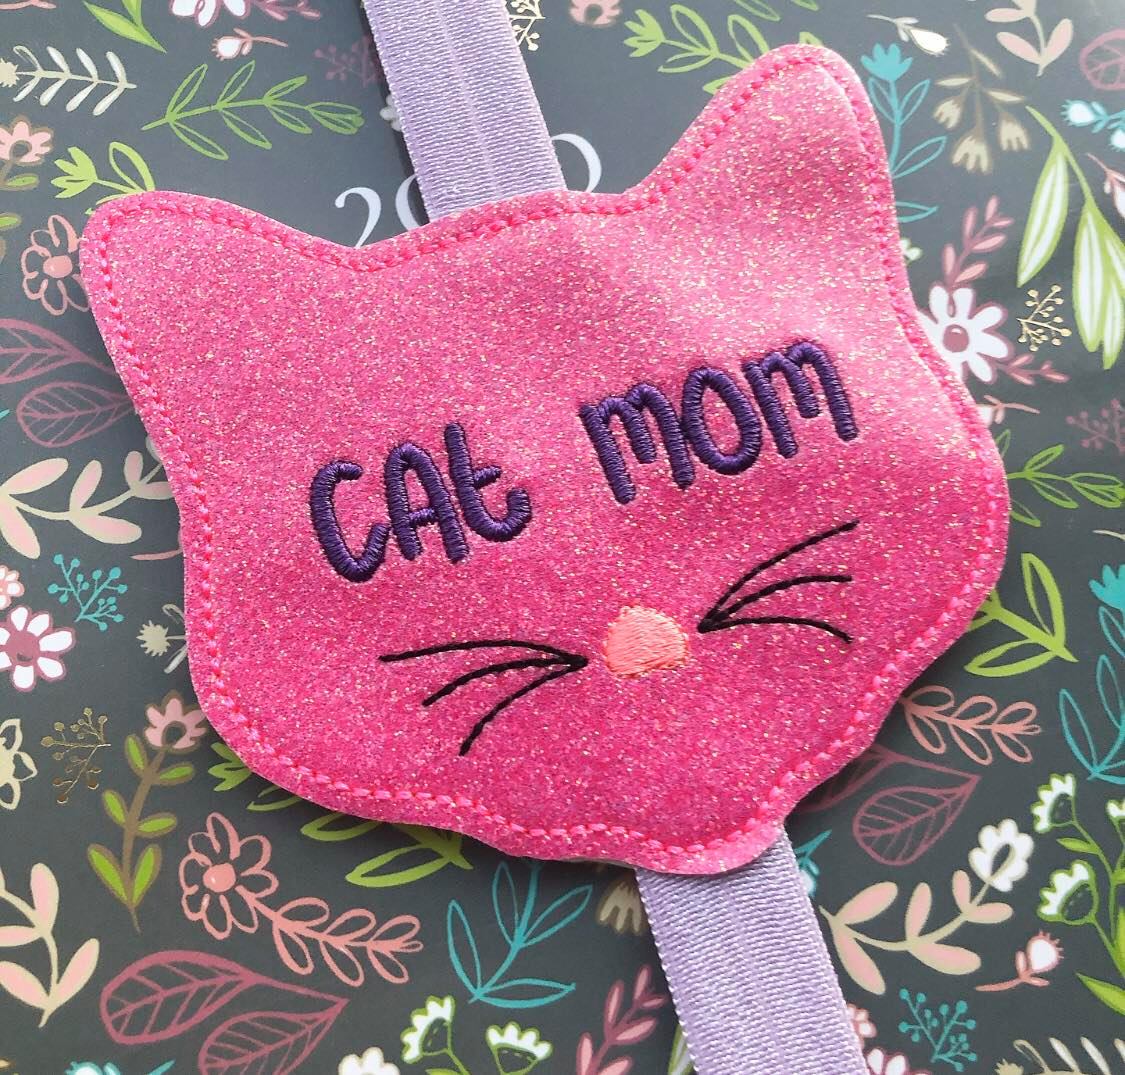 Cat Mom - Book Band - Digital Embroidery Design